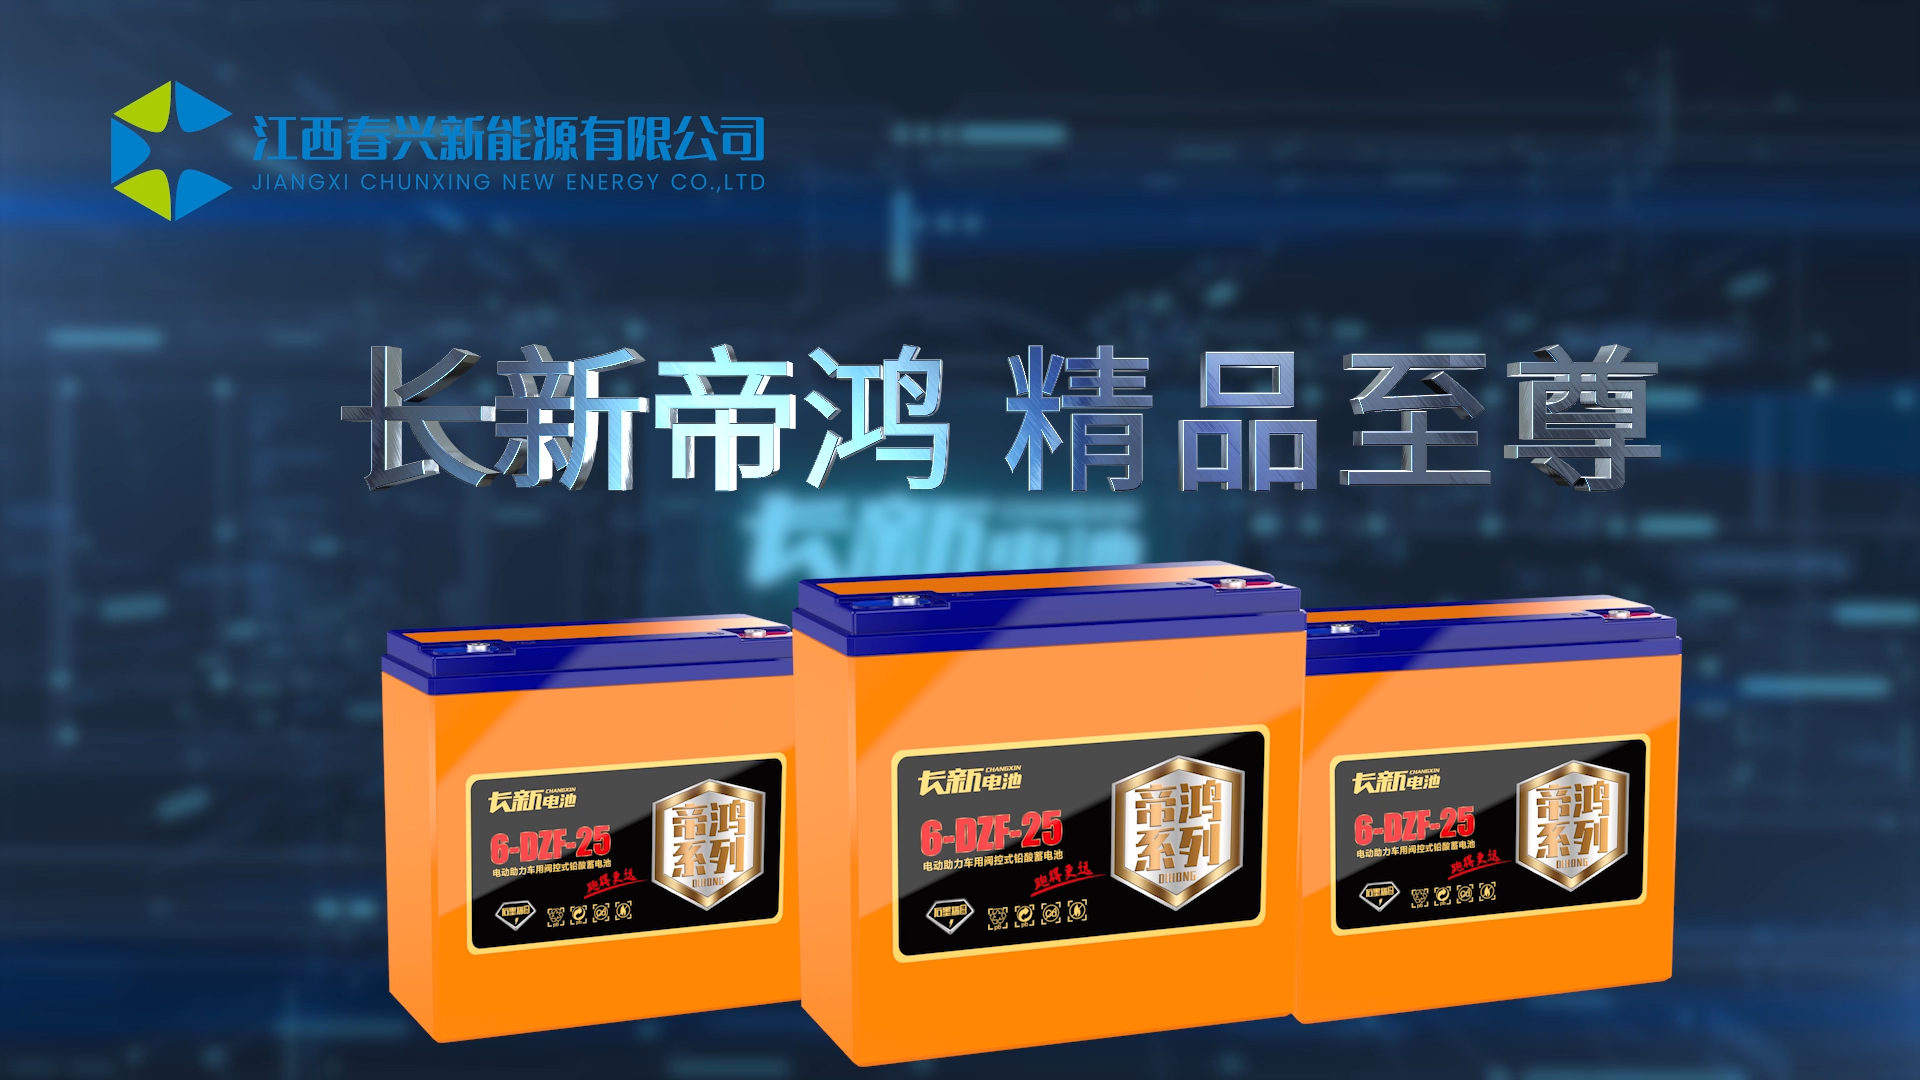 Changxin Dihong, high-quality products!